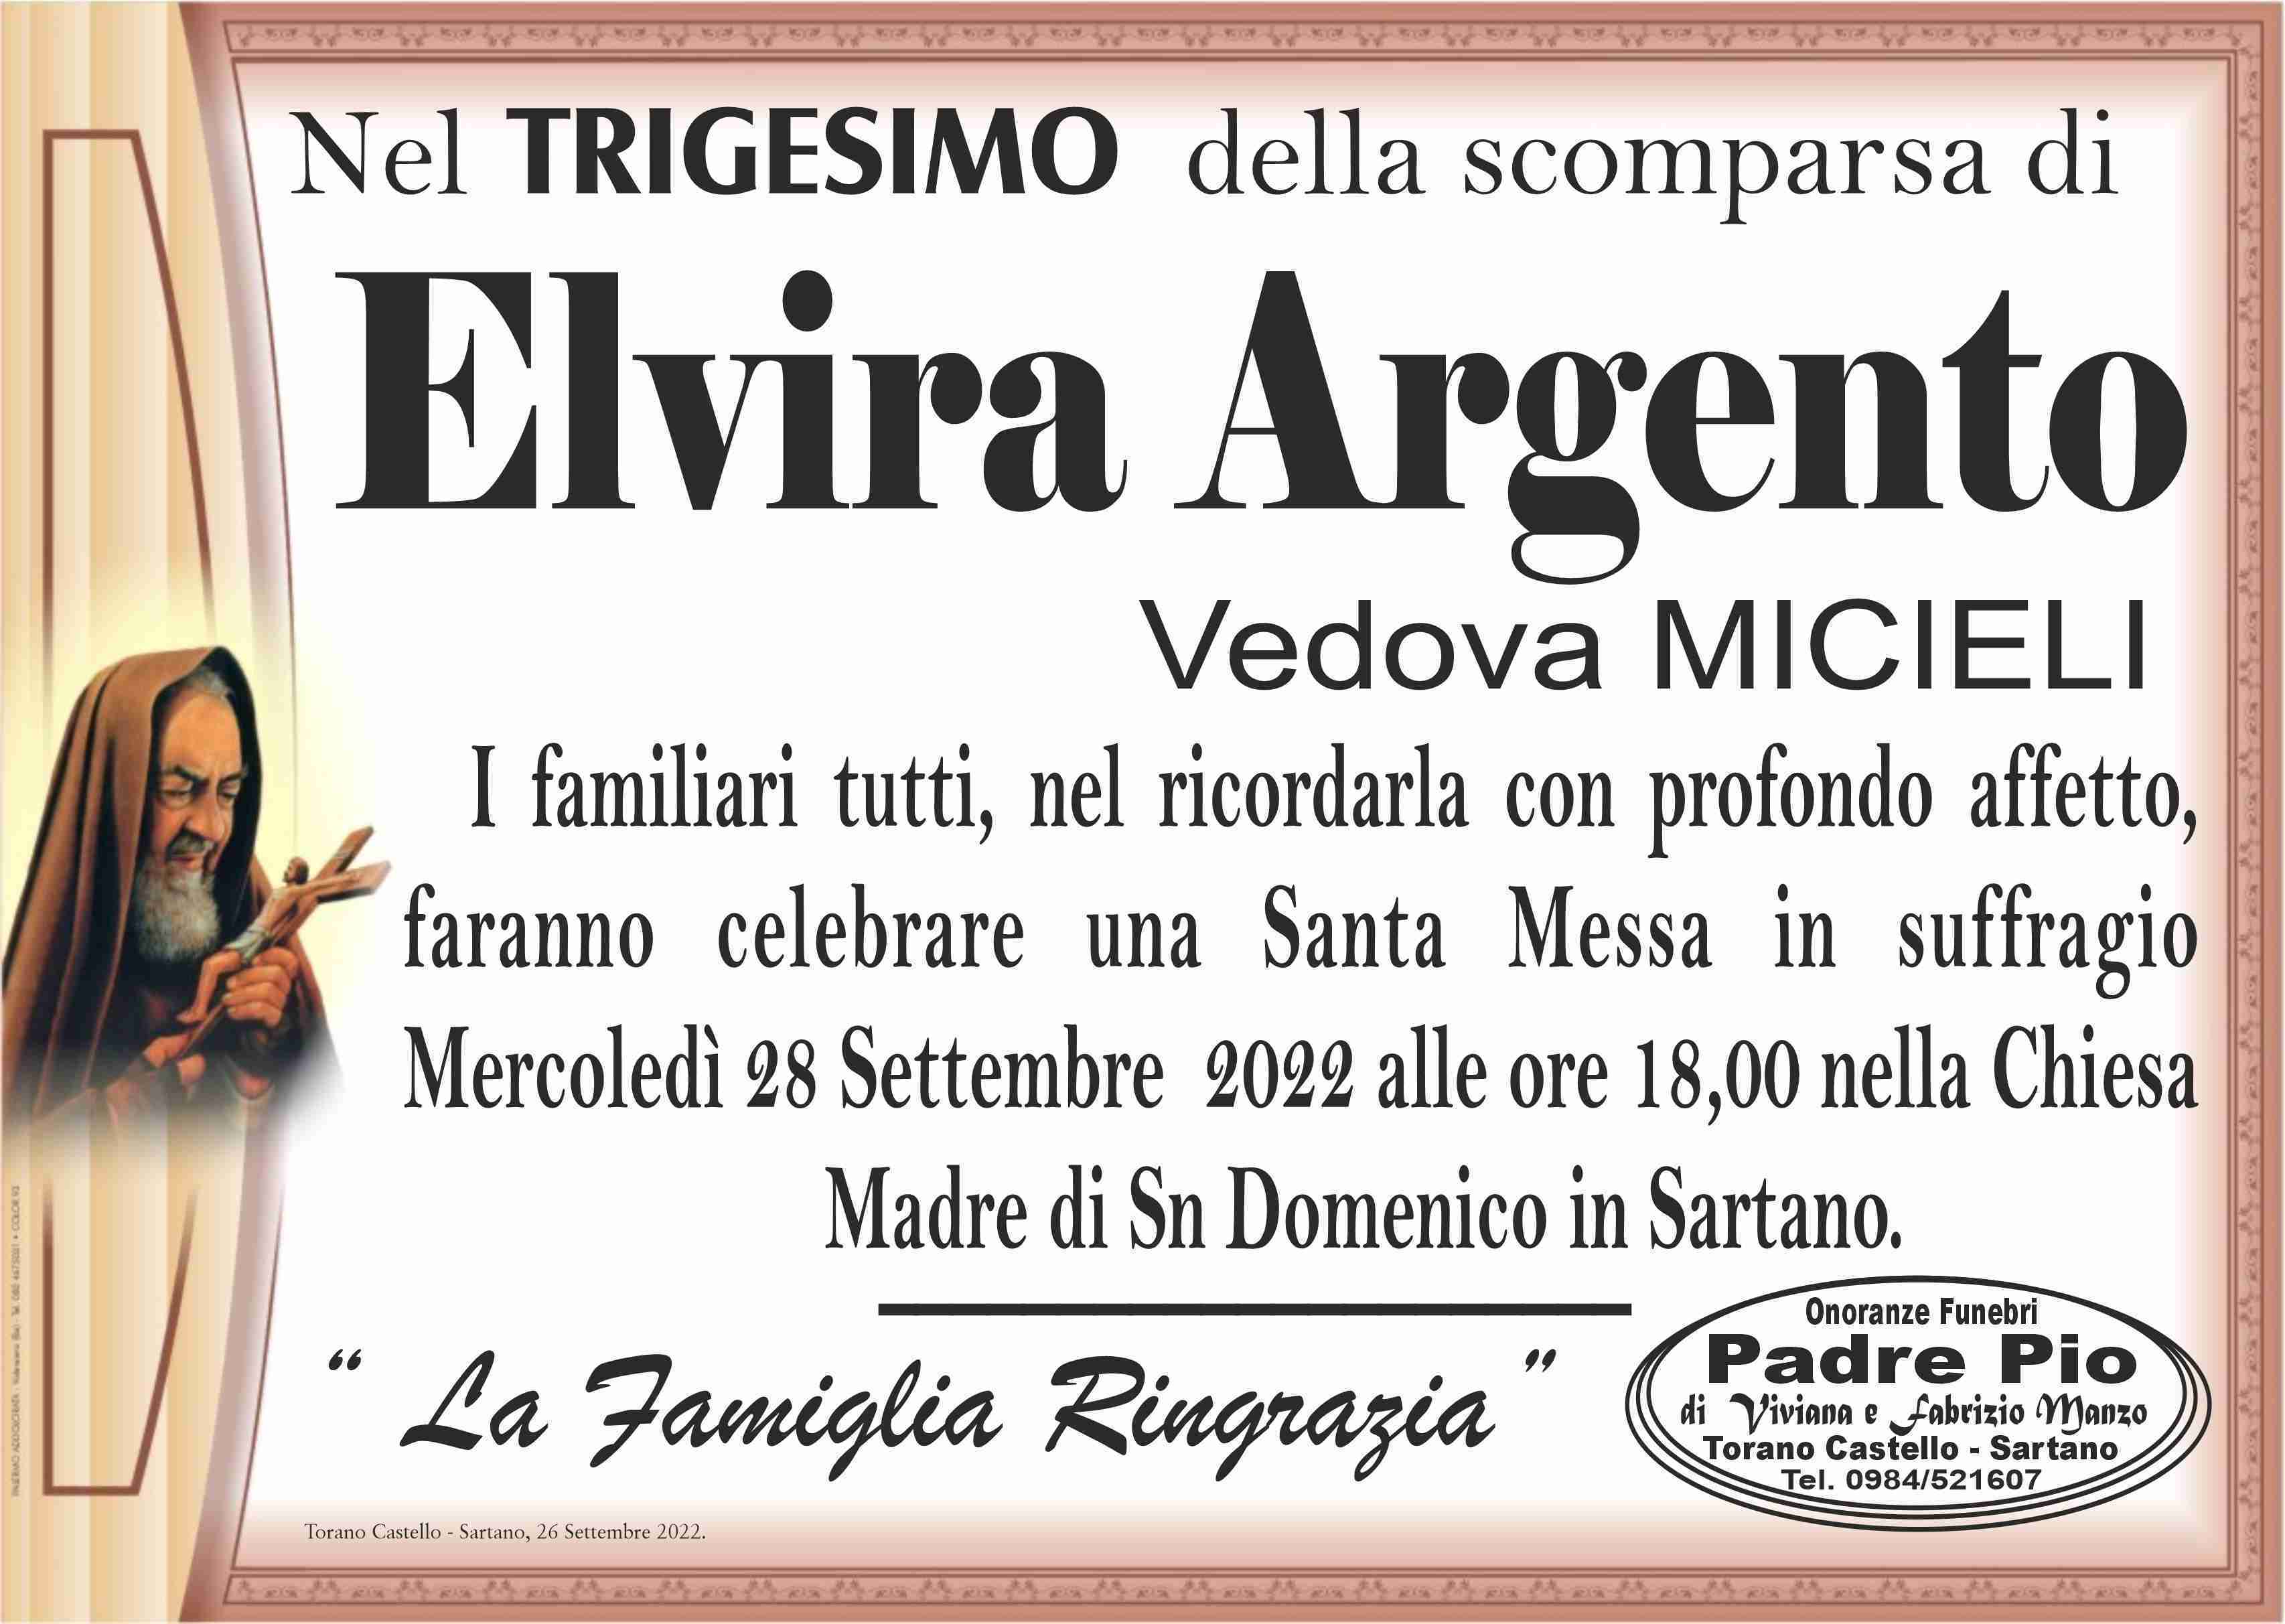 Elvira Argento